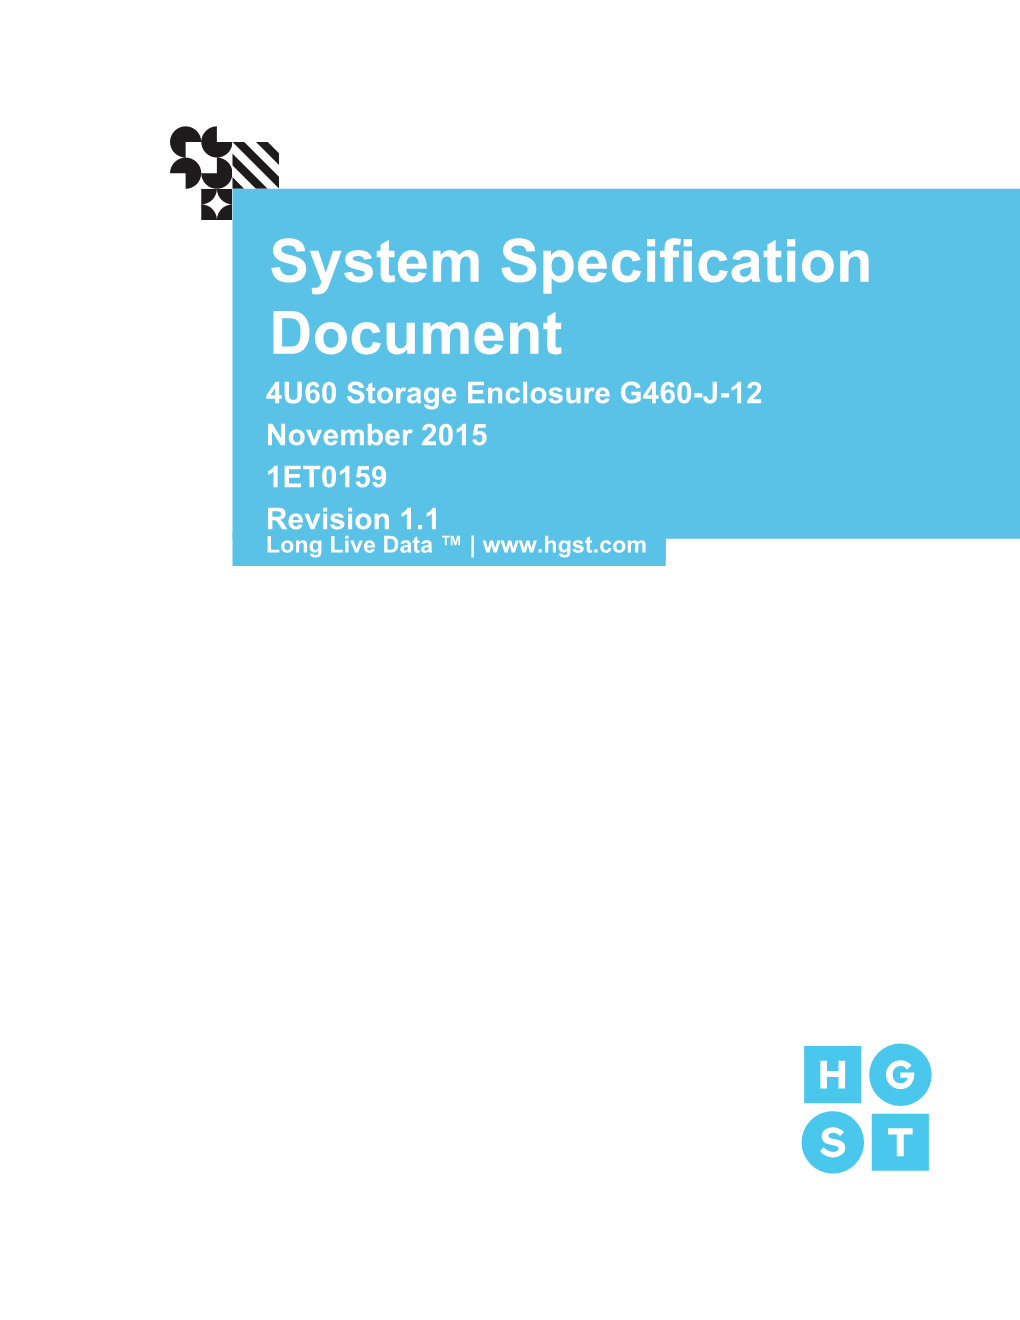 4U60 Storage Enclosure System Specification Document